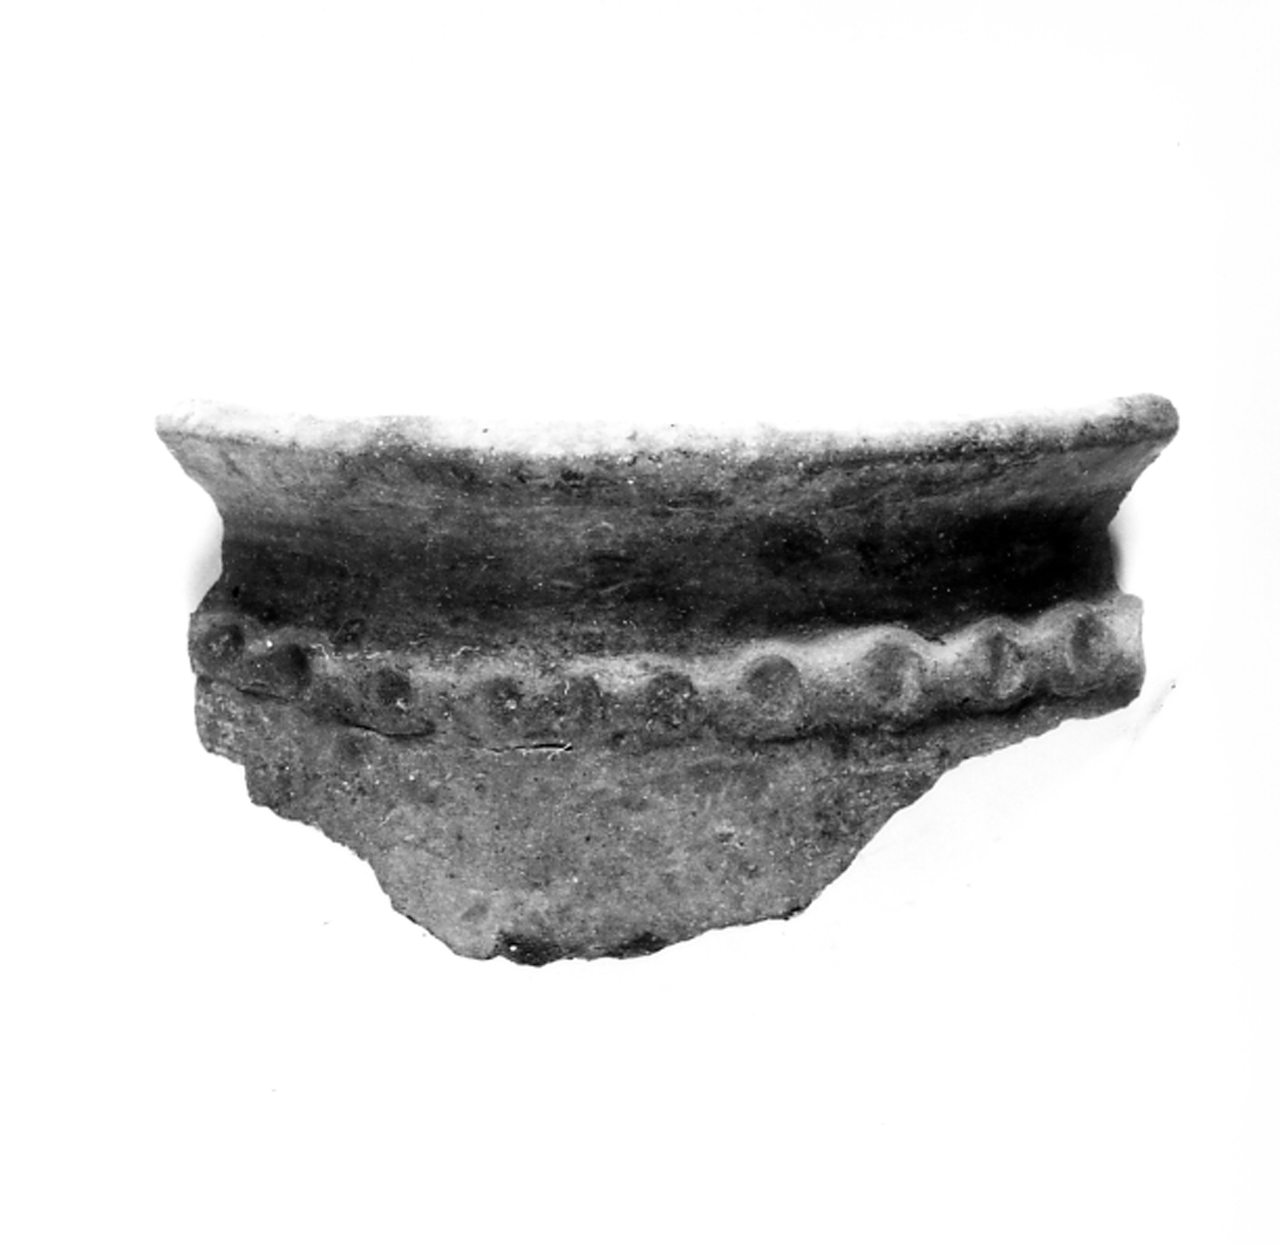 olla con orlo a tesa - ambito berico-euganeo (sec. XII a.C)